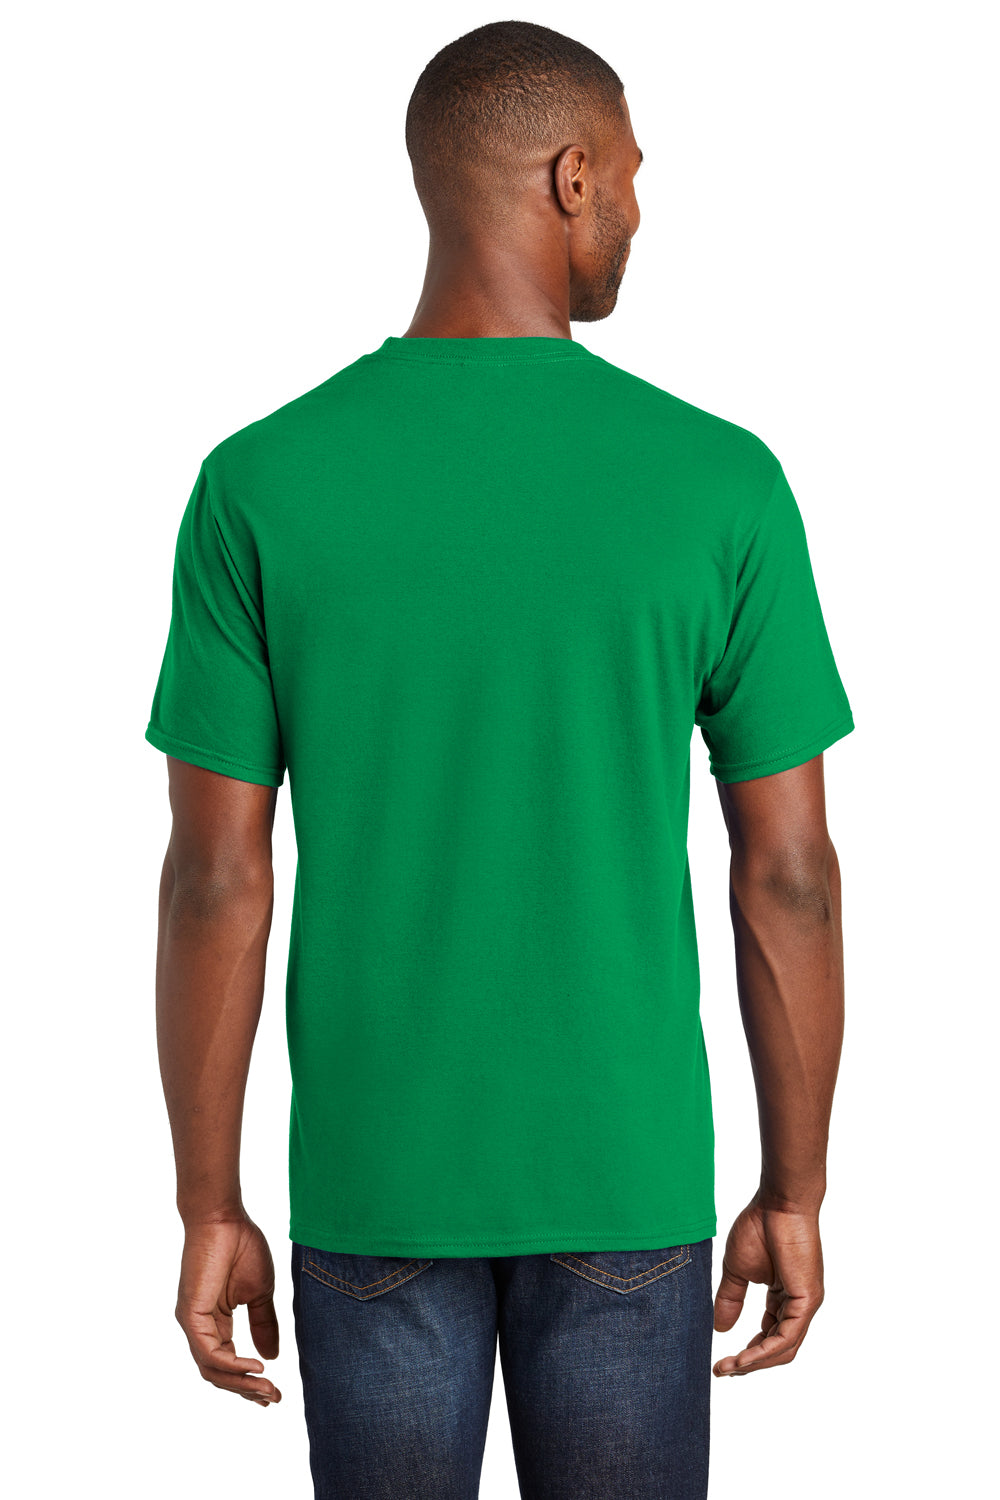 Port & Company PC450 Mens Fan Favorite Short Sleeve Crewneck T-Shirt Athletic Kelly Green Back